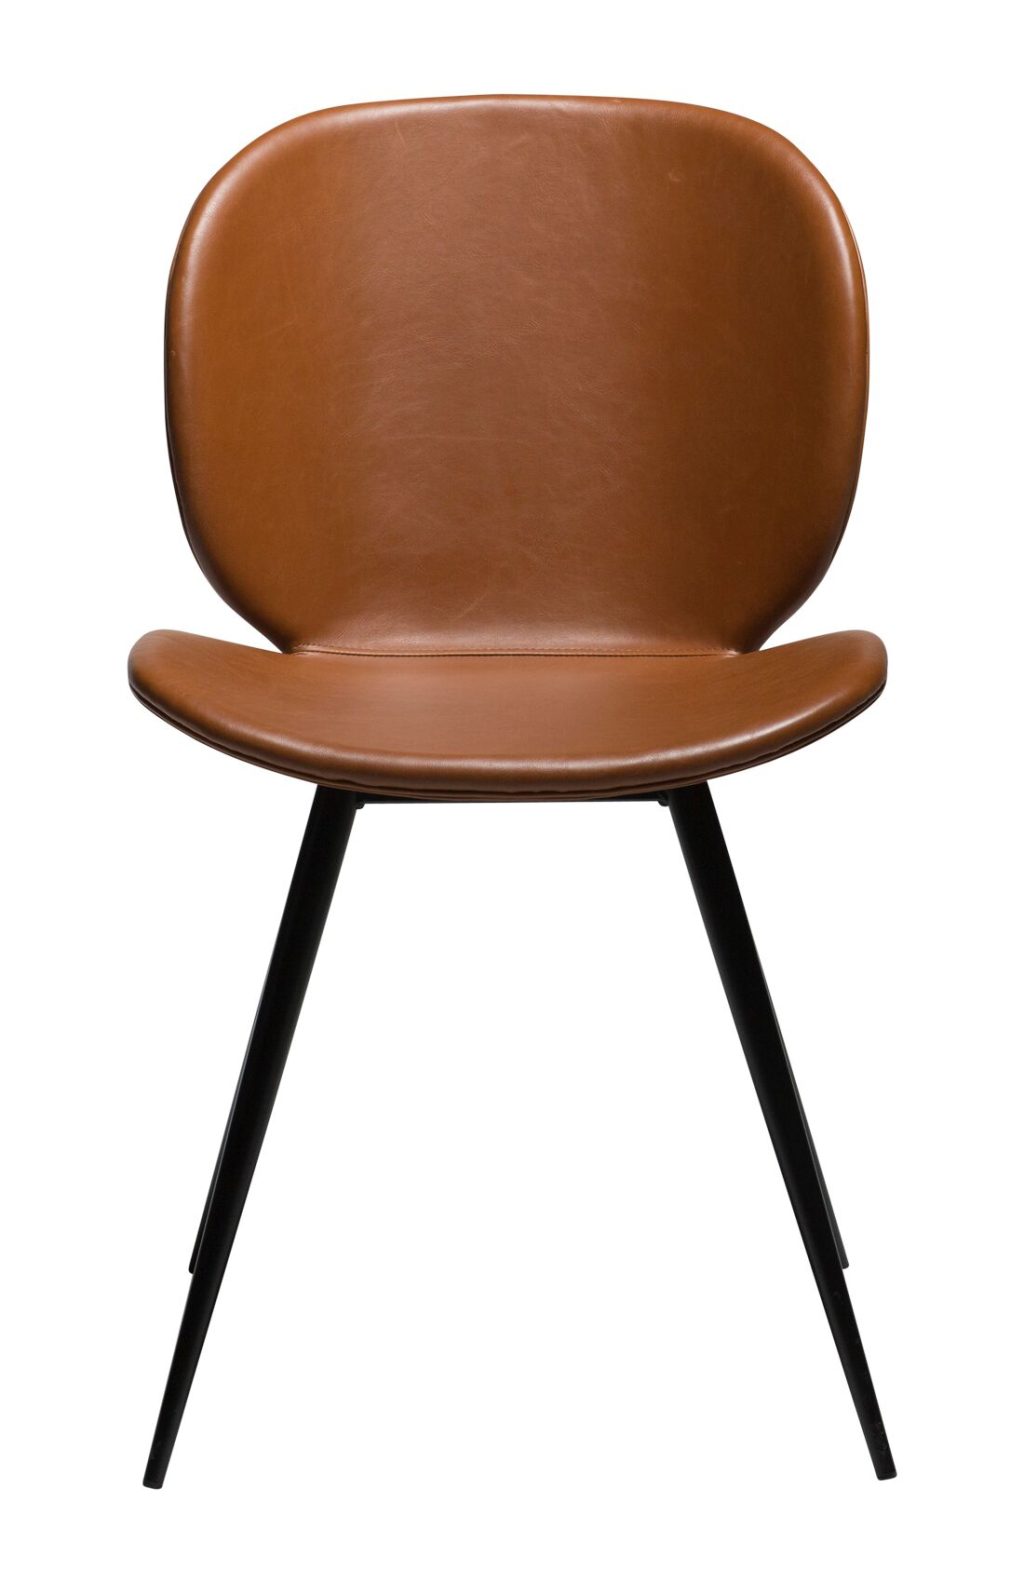 Cloud chair - vintage light brown